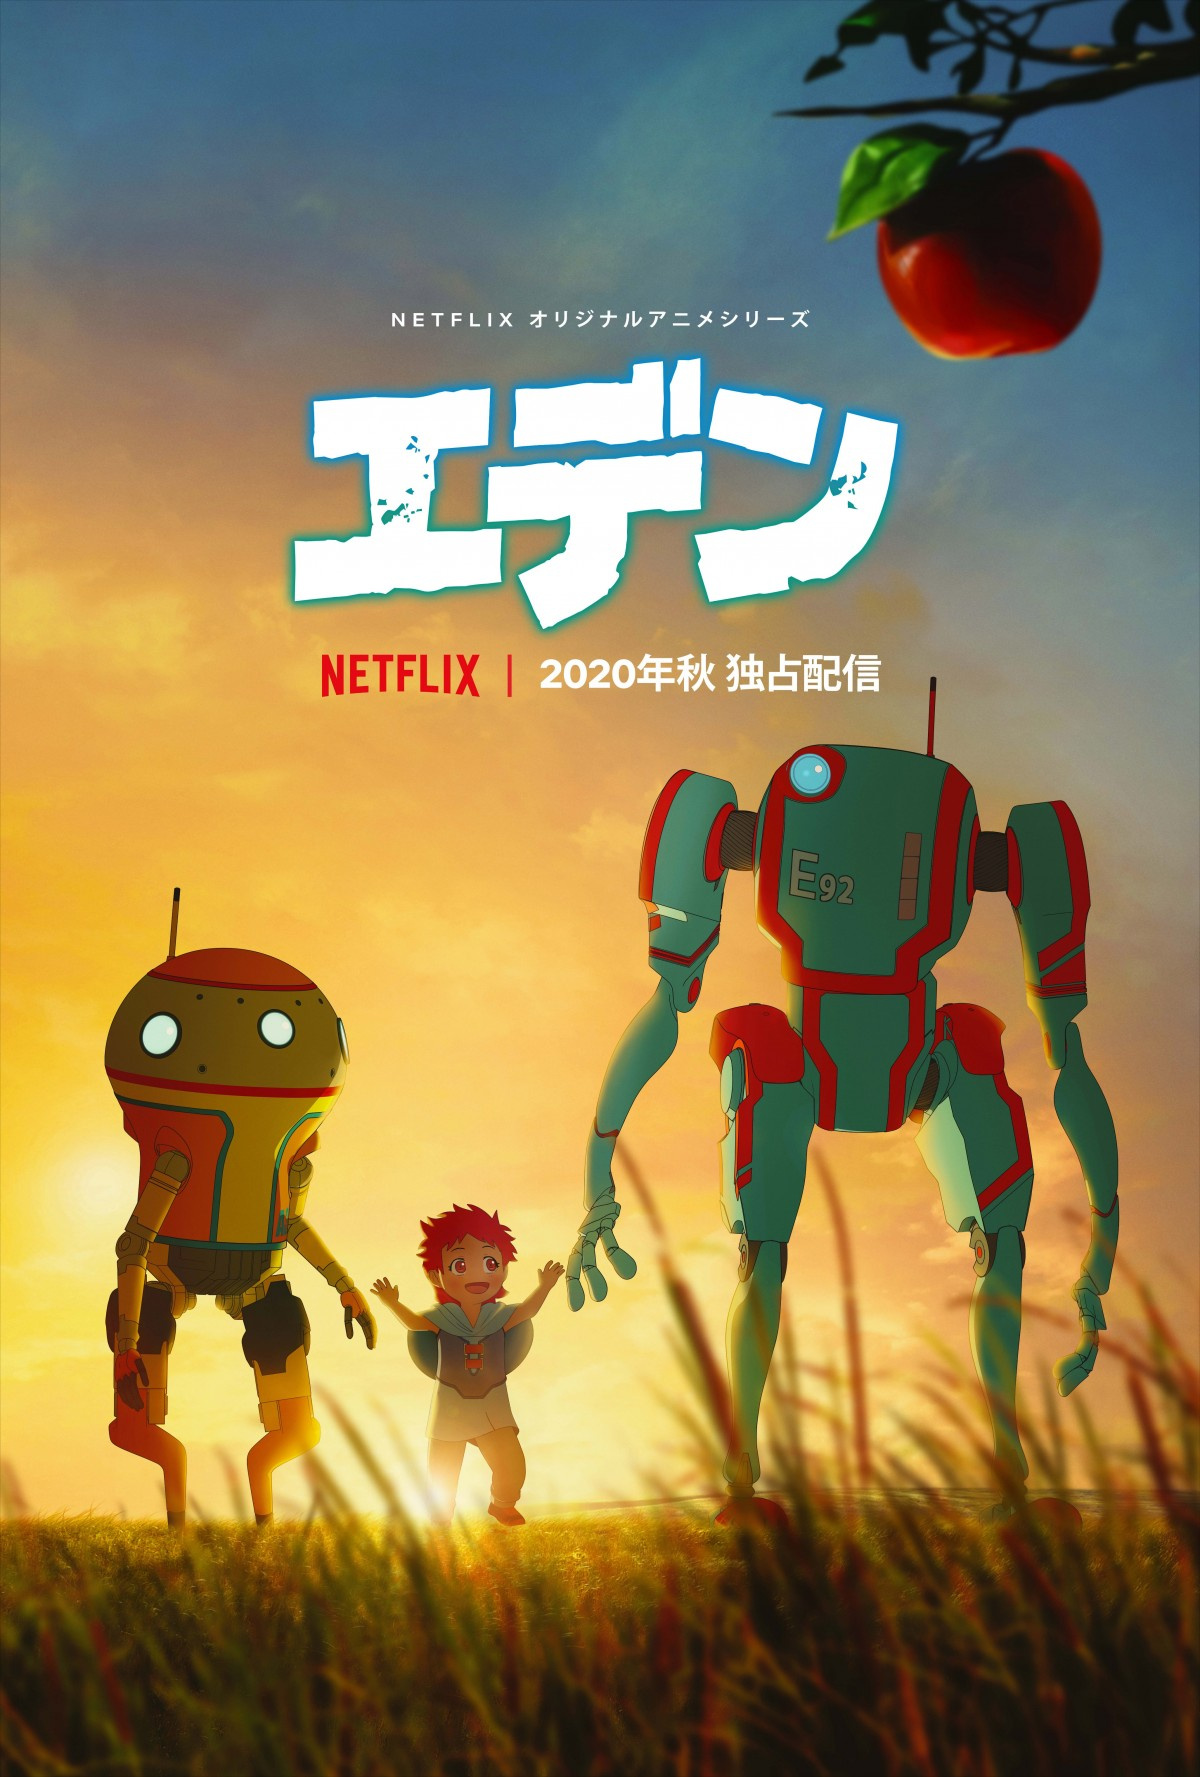 Netflixオリジナルアニメ エデン 来秋に独占配信 ティザー映像公開 Oricon News